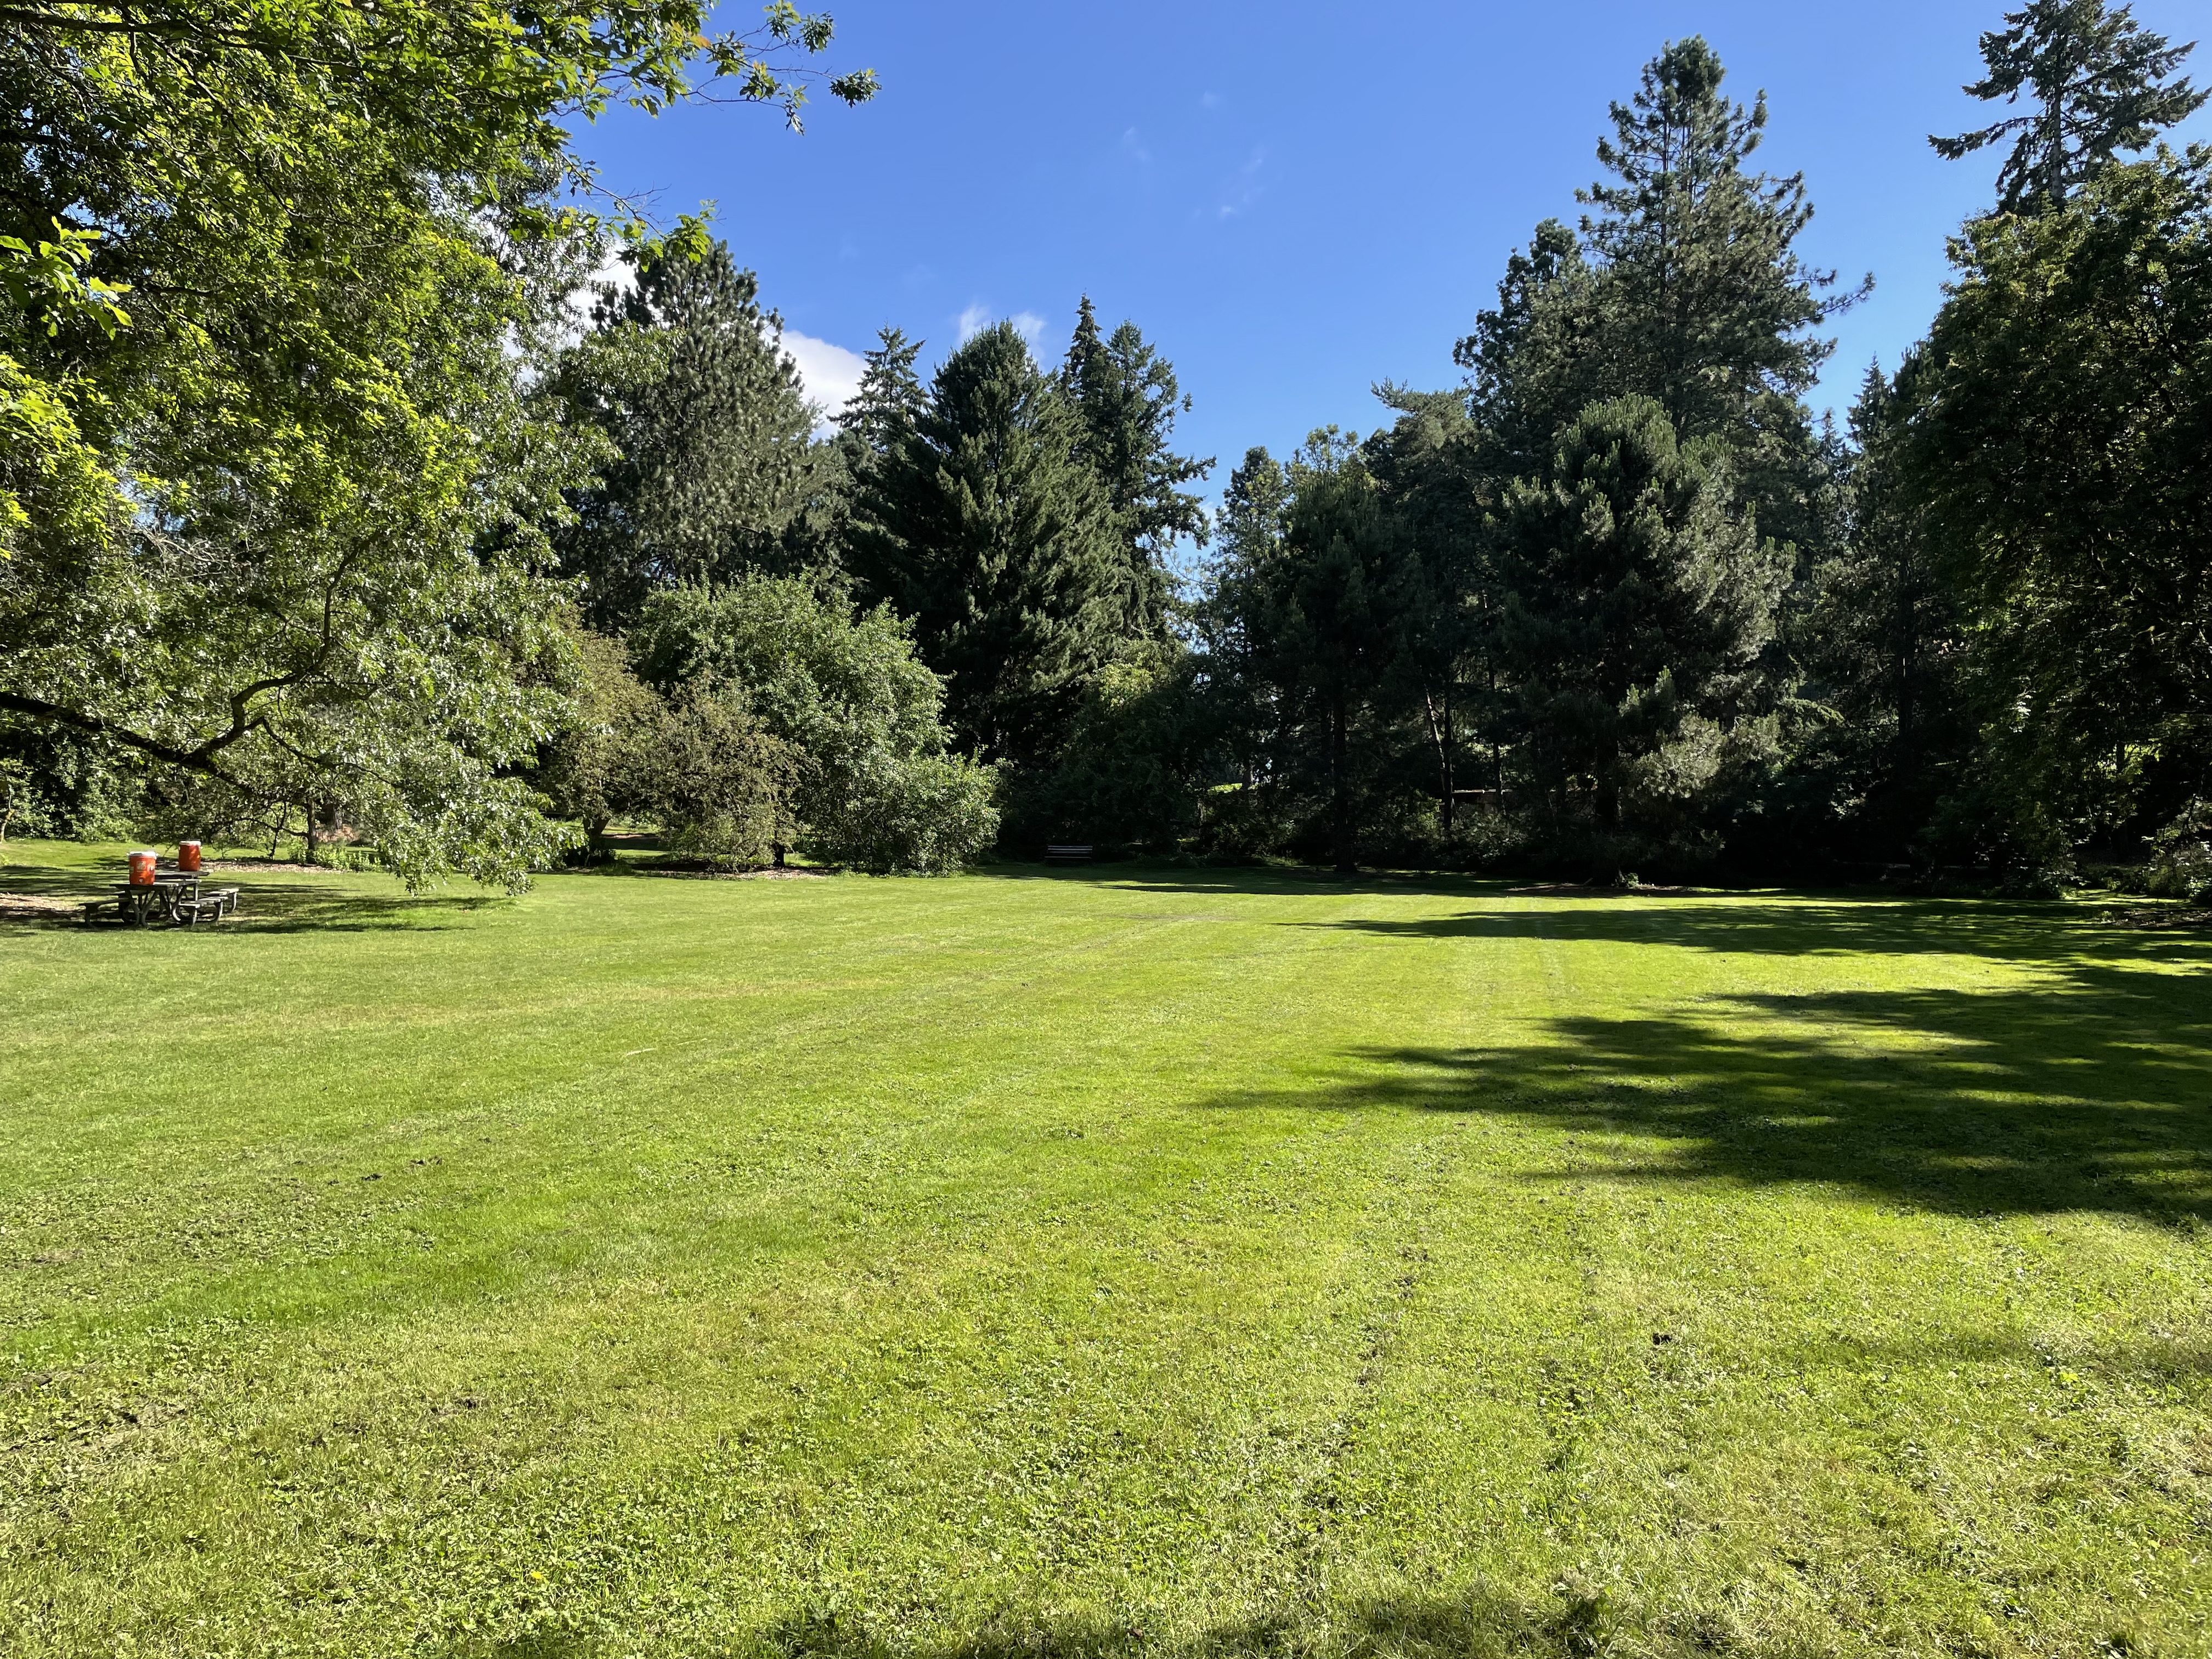 Green grassy meadow at Washington Park Arboretum